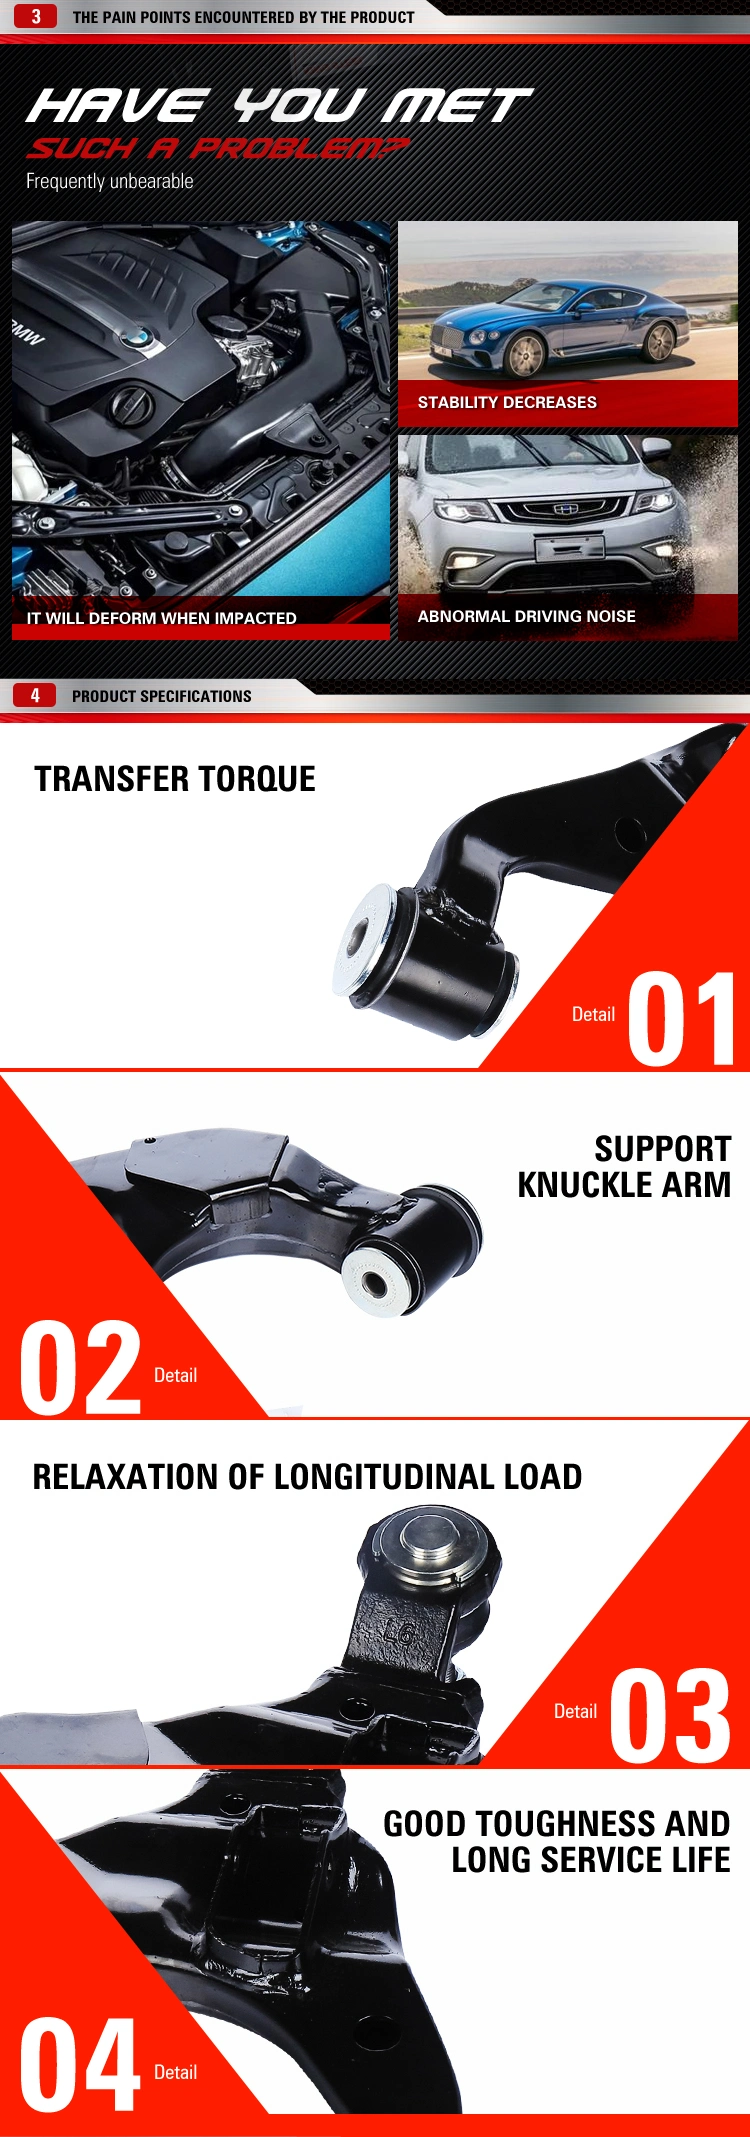 Kingsteel Wholesale Auto Suspension System Left Control Arm for Honda Cr-V RM 2013-2019 OEM (51360-T1W-E12)